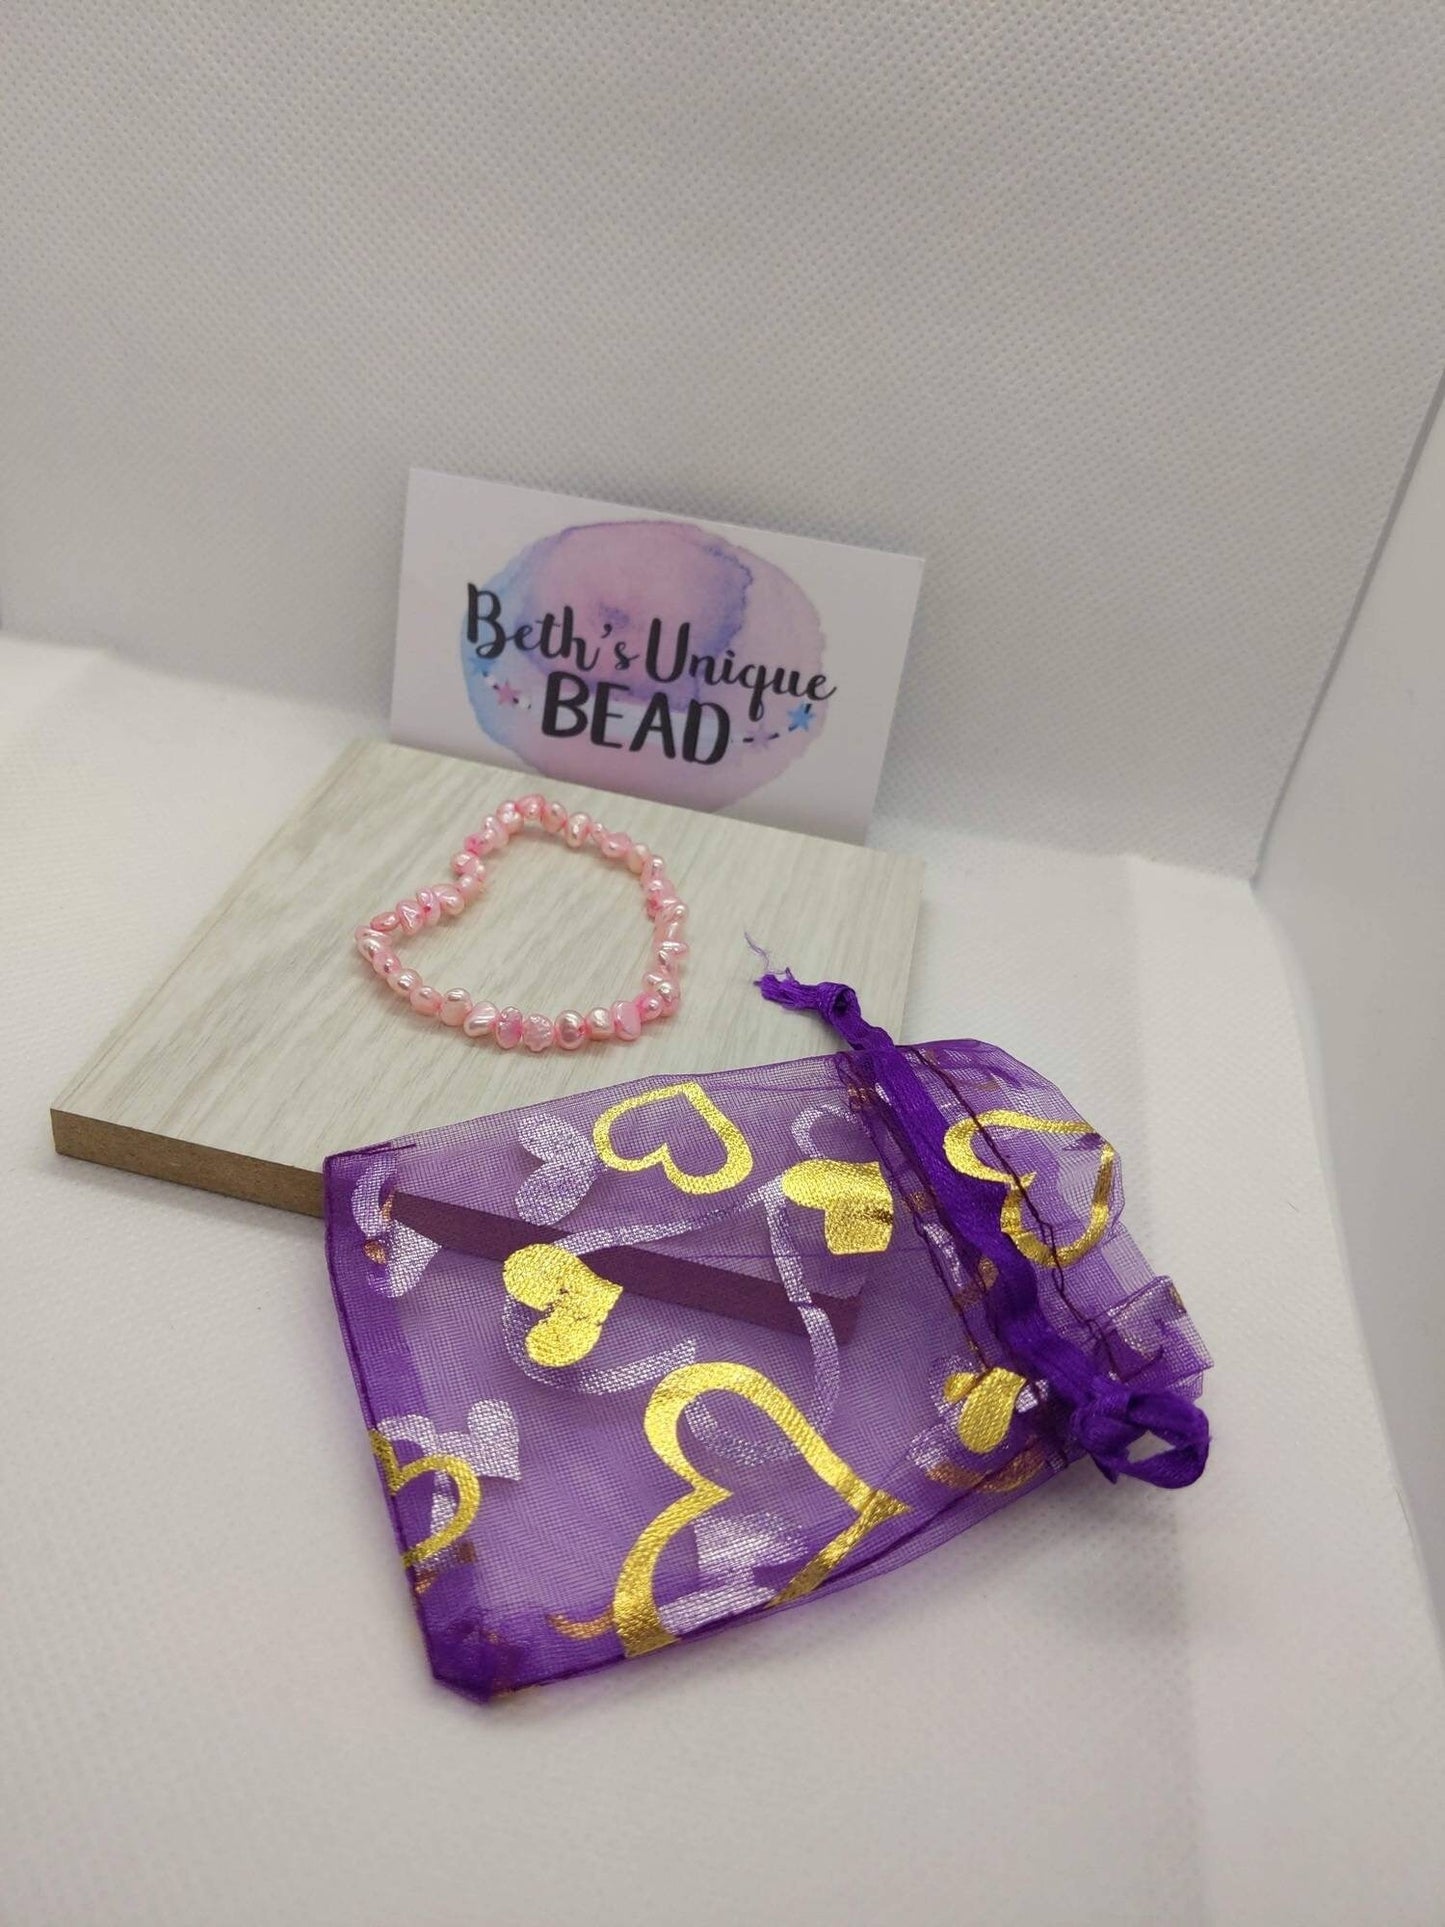 Freshwater pearl set, pink pearl earrings, bridal party, bridal jewellery, Bridesmaid gift, girly bracelet